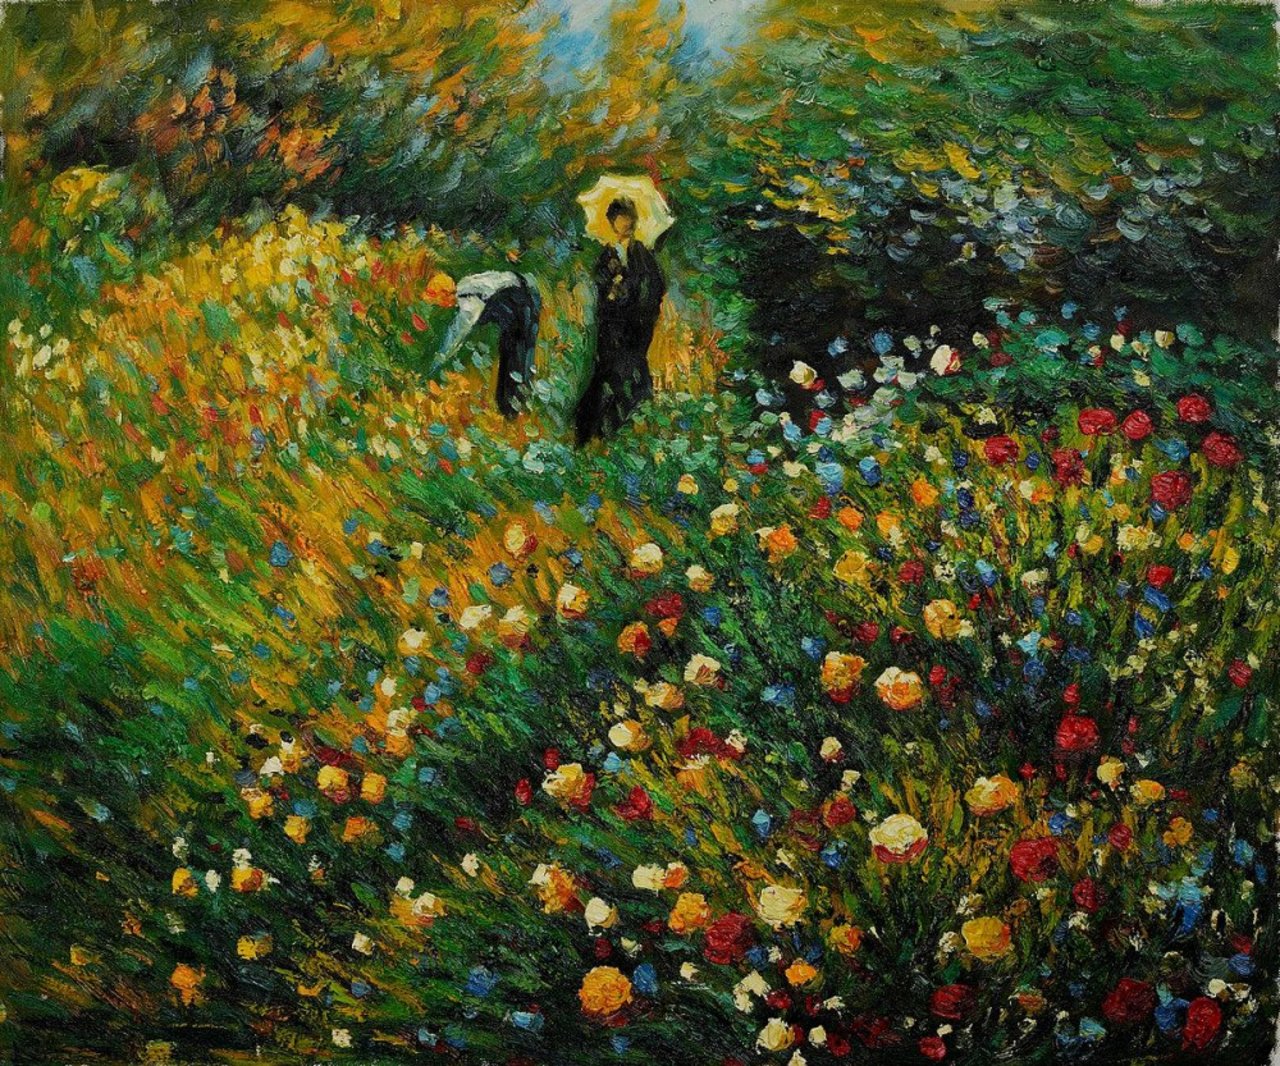 Pierre-Auguste Renoir 1841-1919French impressionist painter"Summer landscape.." 1875#art@eoff_sylvia @duckylemon https://t.co/OaJvHuxr3m